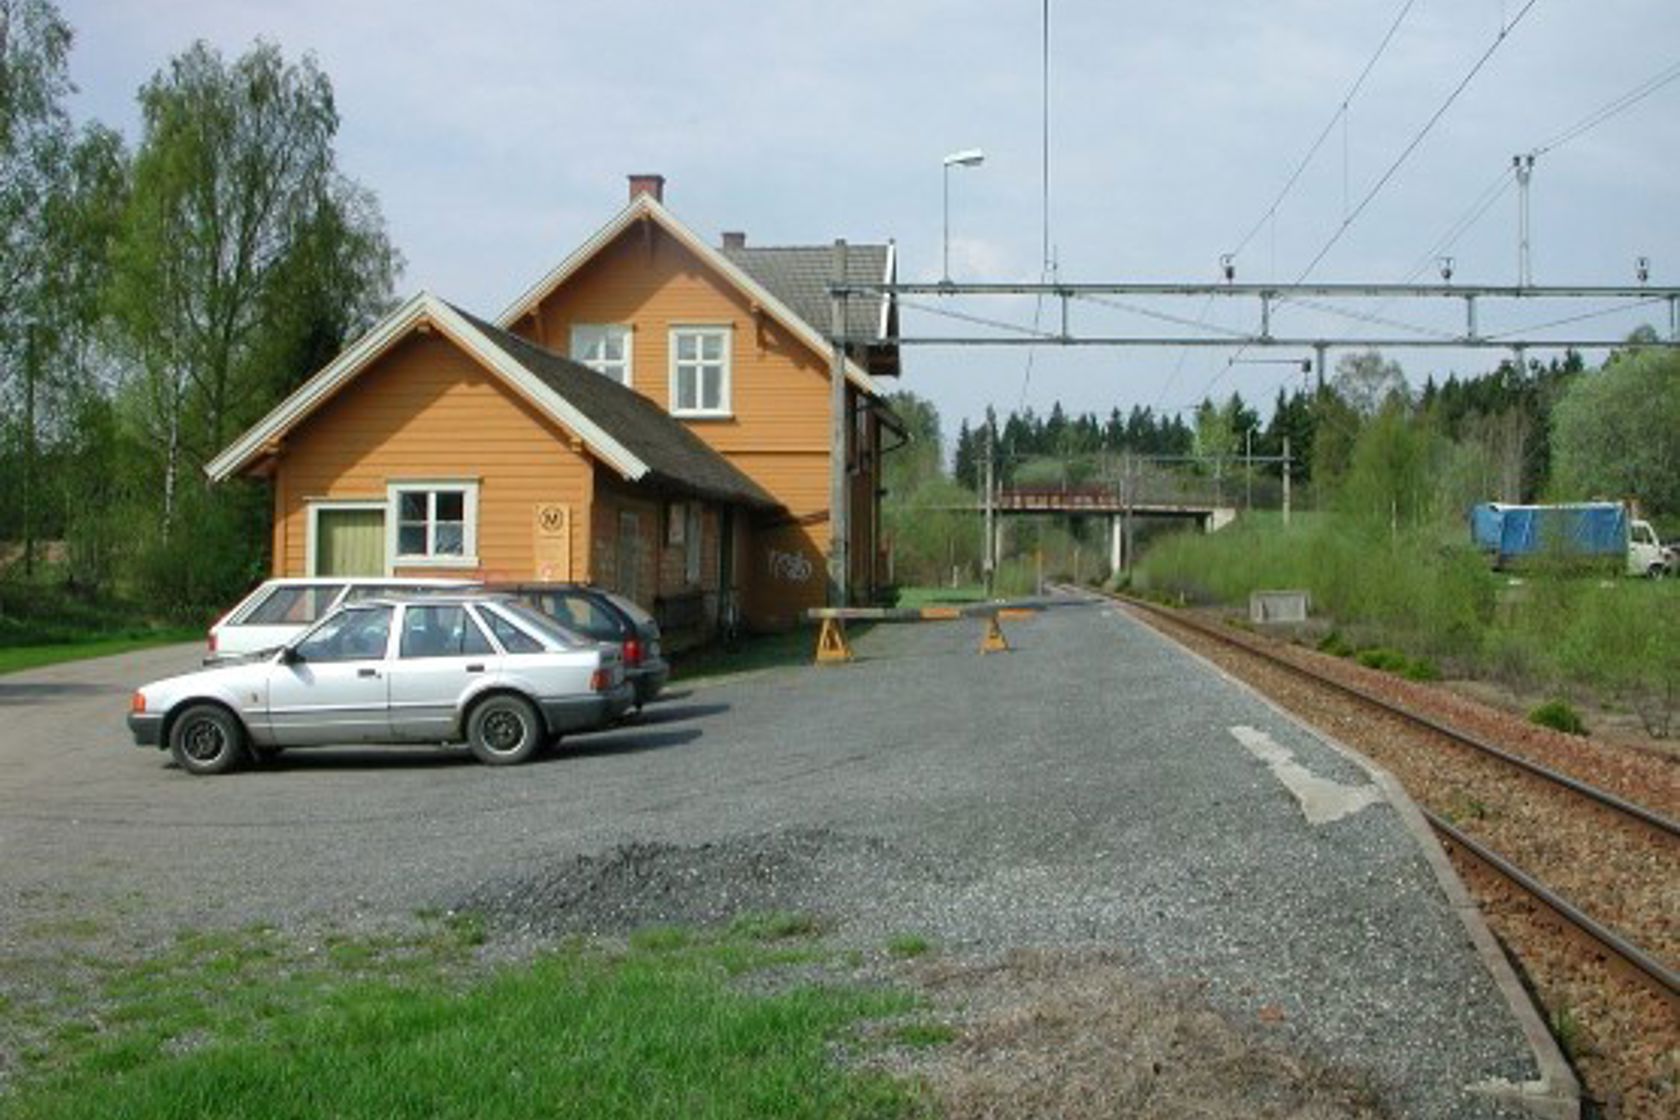 Exterior view of Slitu stop